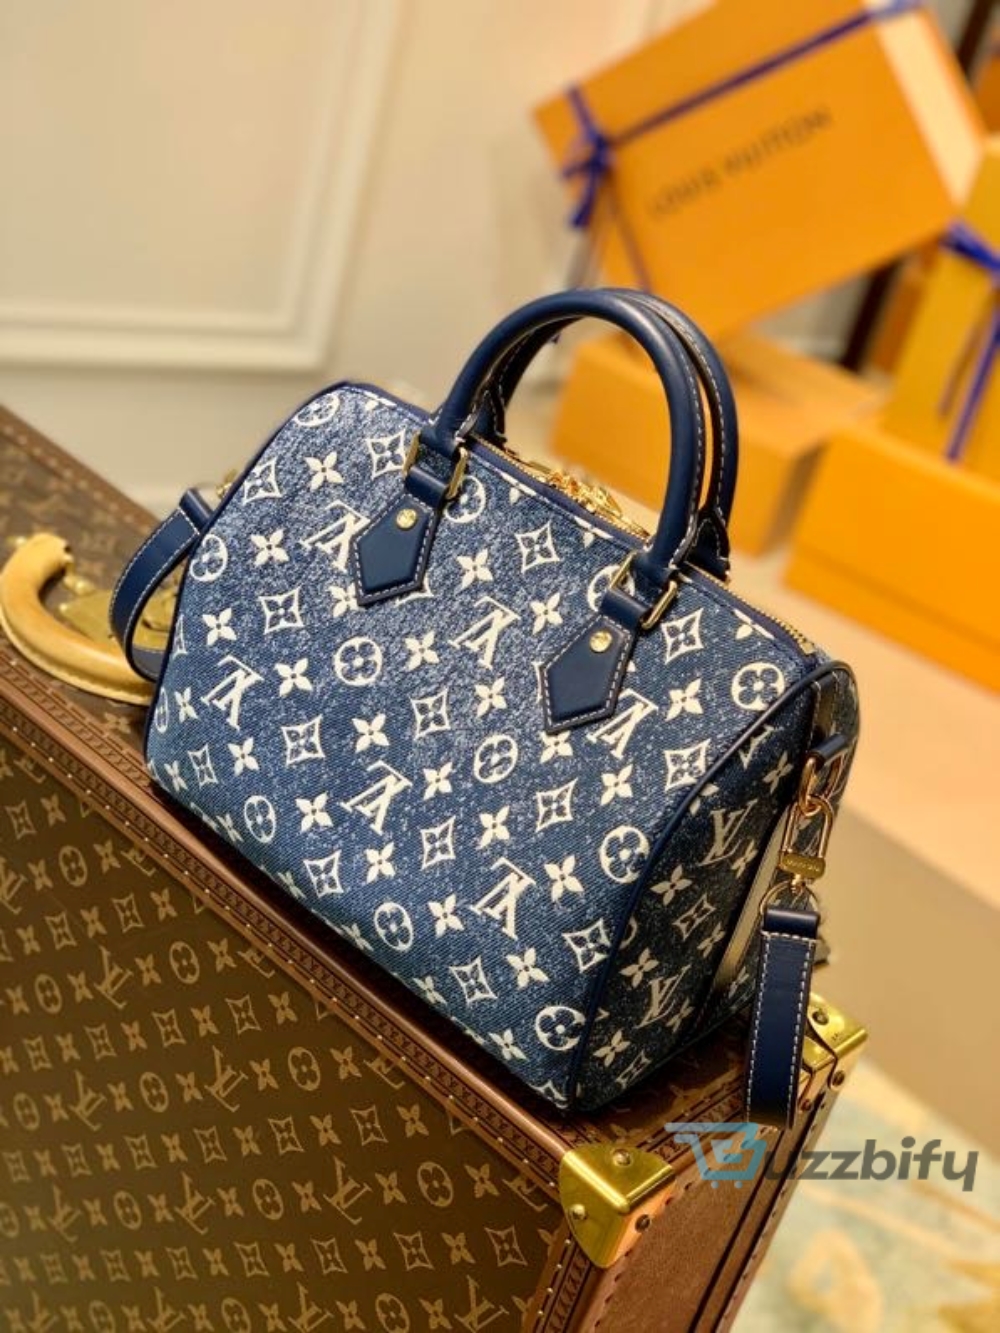 louis vuitton speedy bandouliere 25 monogram denim jacquard navy blue for women womens handbags 98in25cm lv m59609 2799 buzzbify 1 4